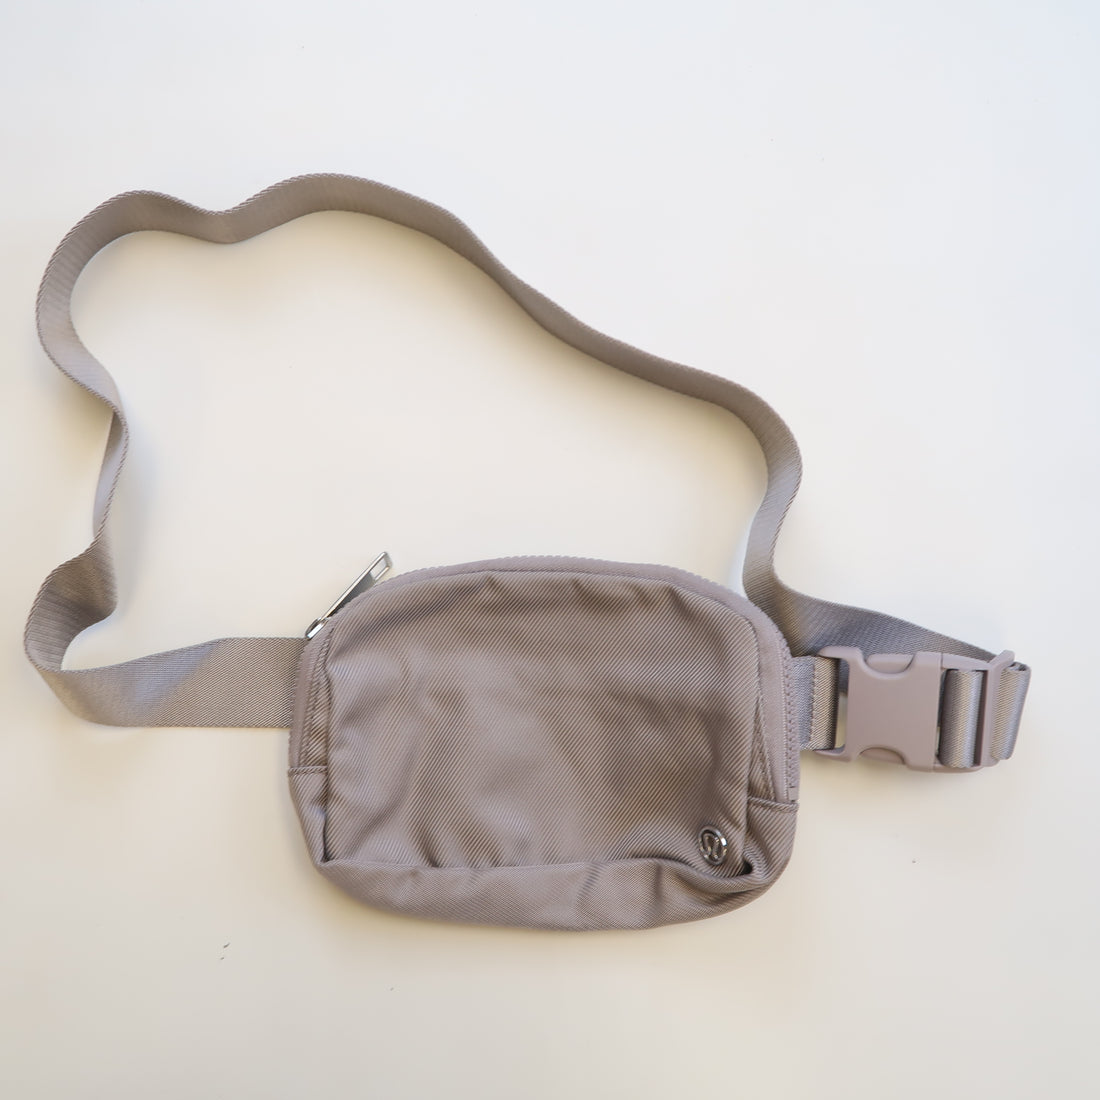 Lululemon - Belt Bag